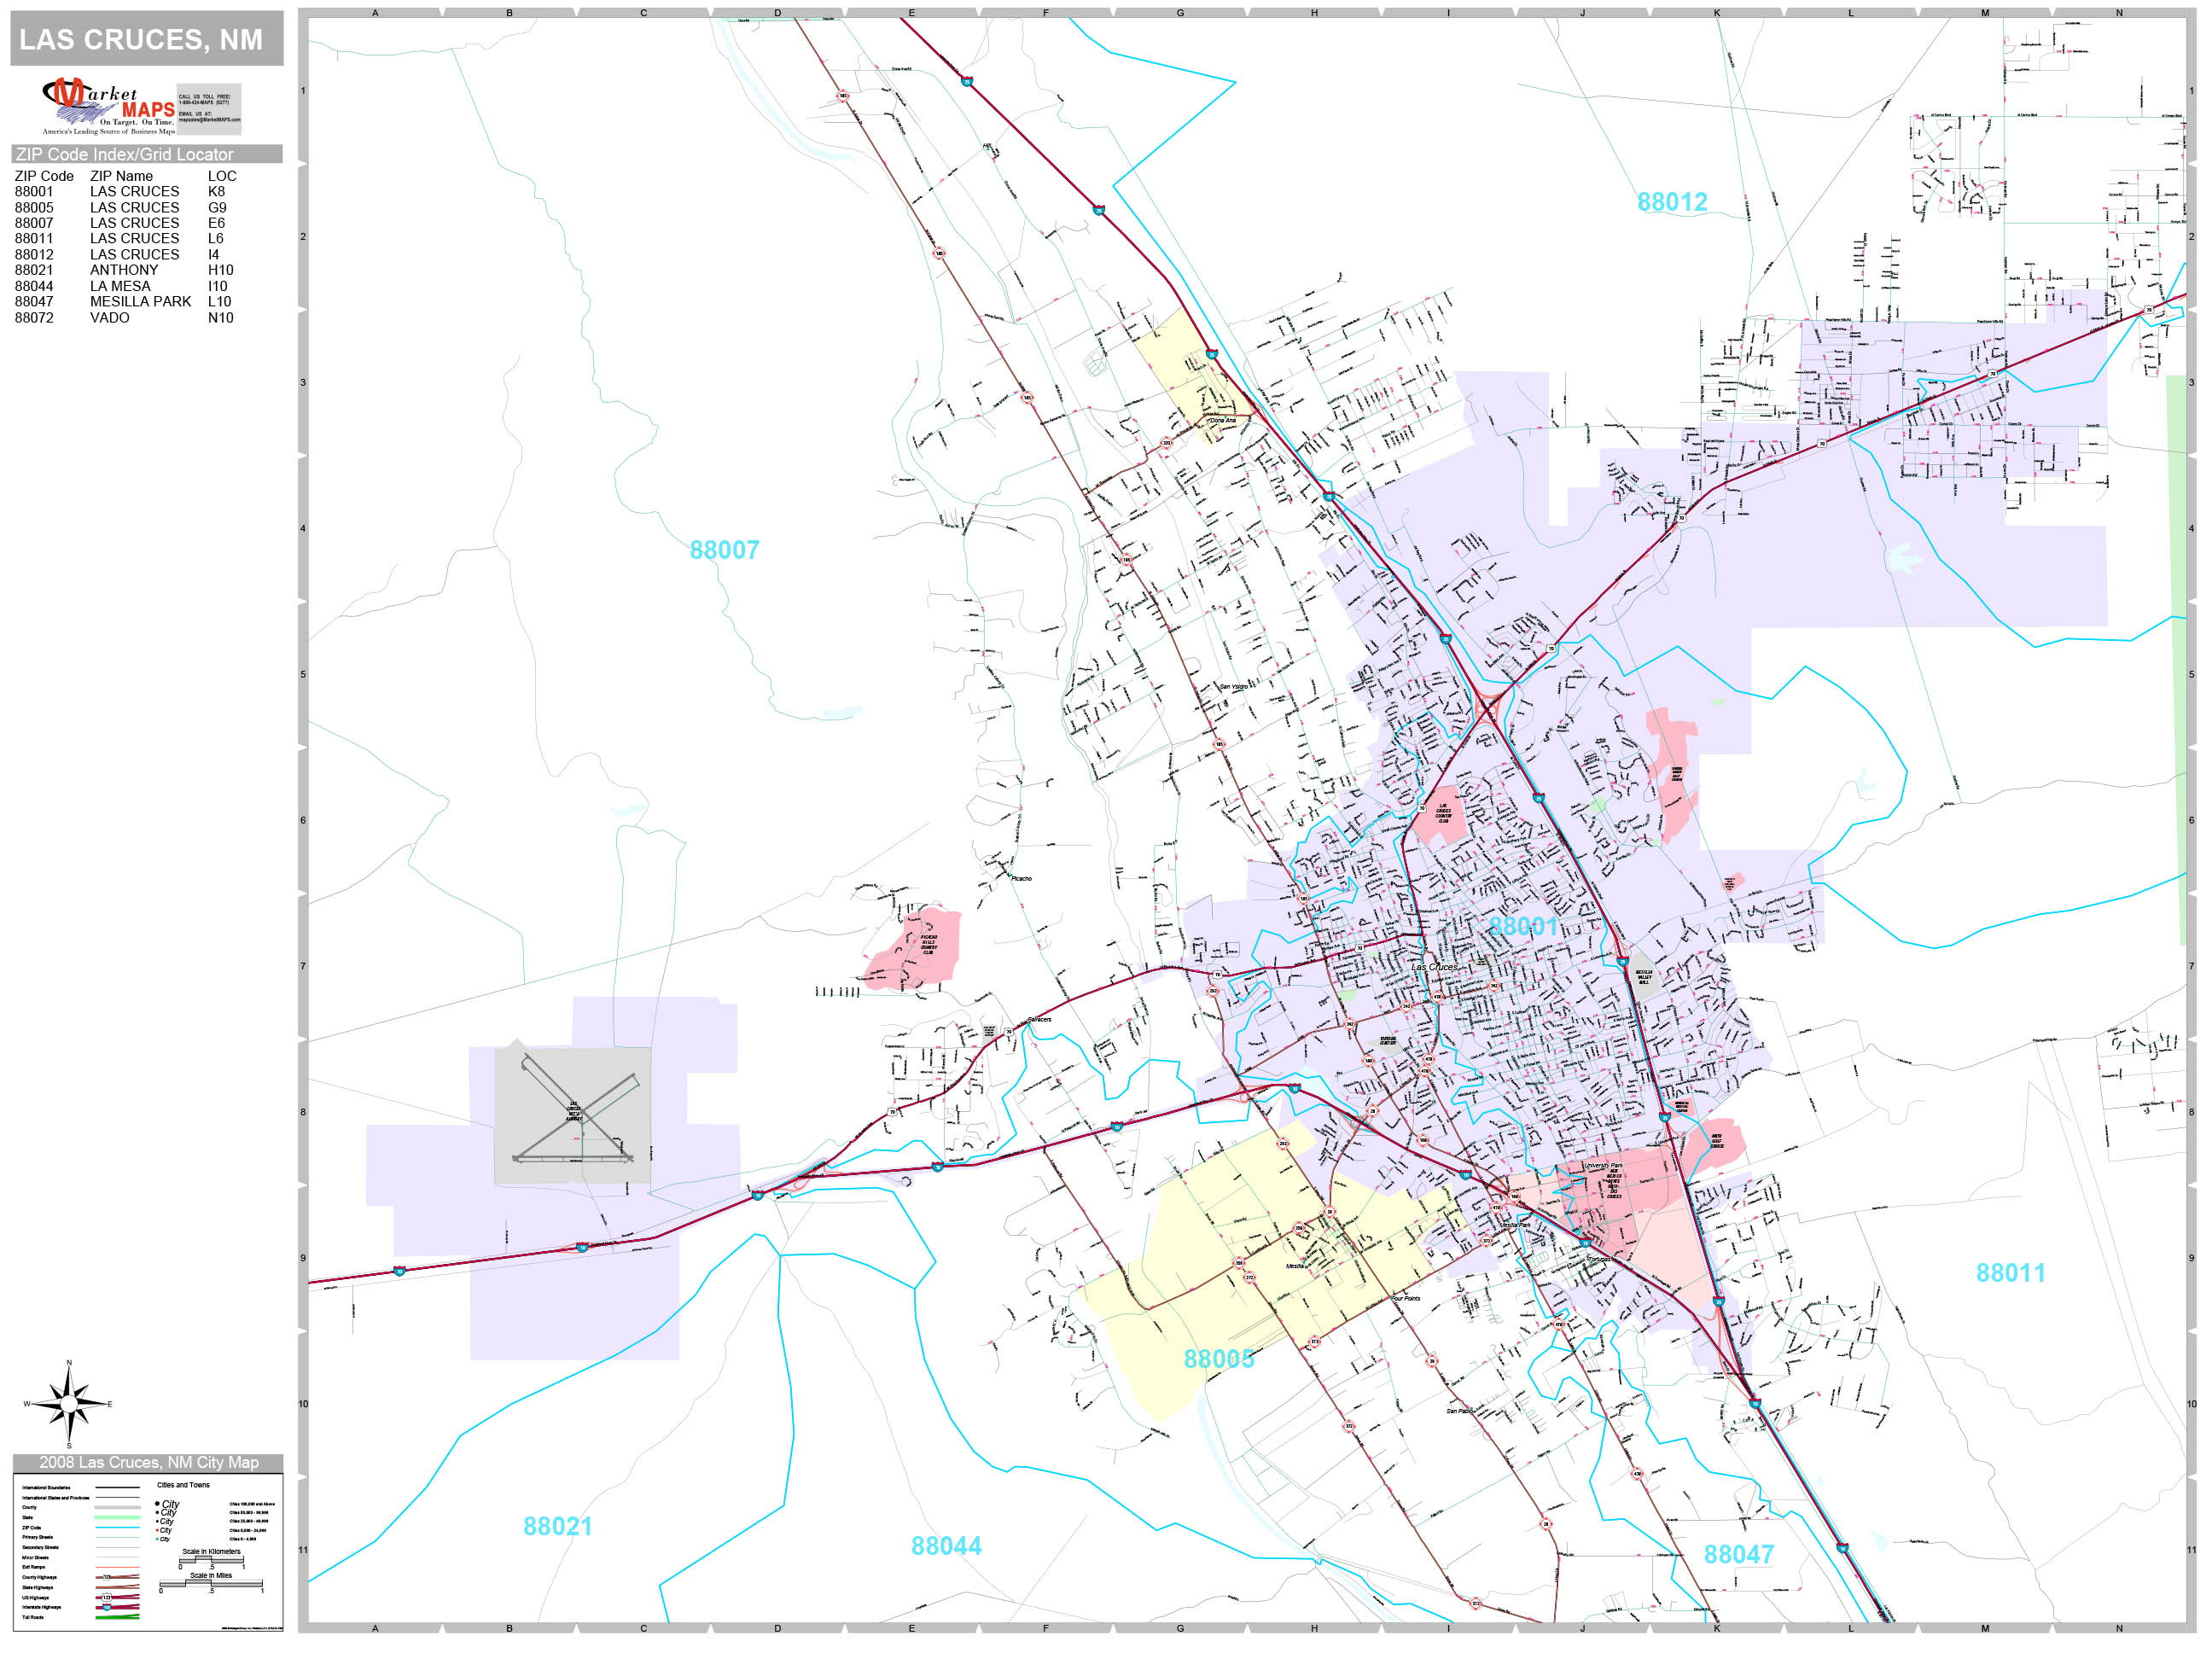 Las Cruces City Map